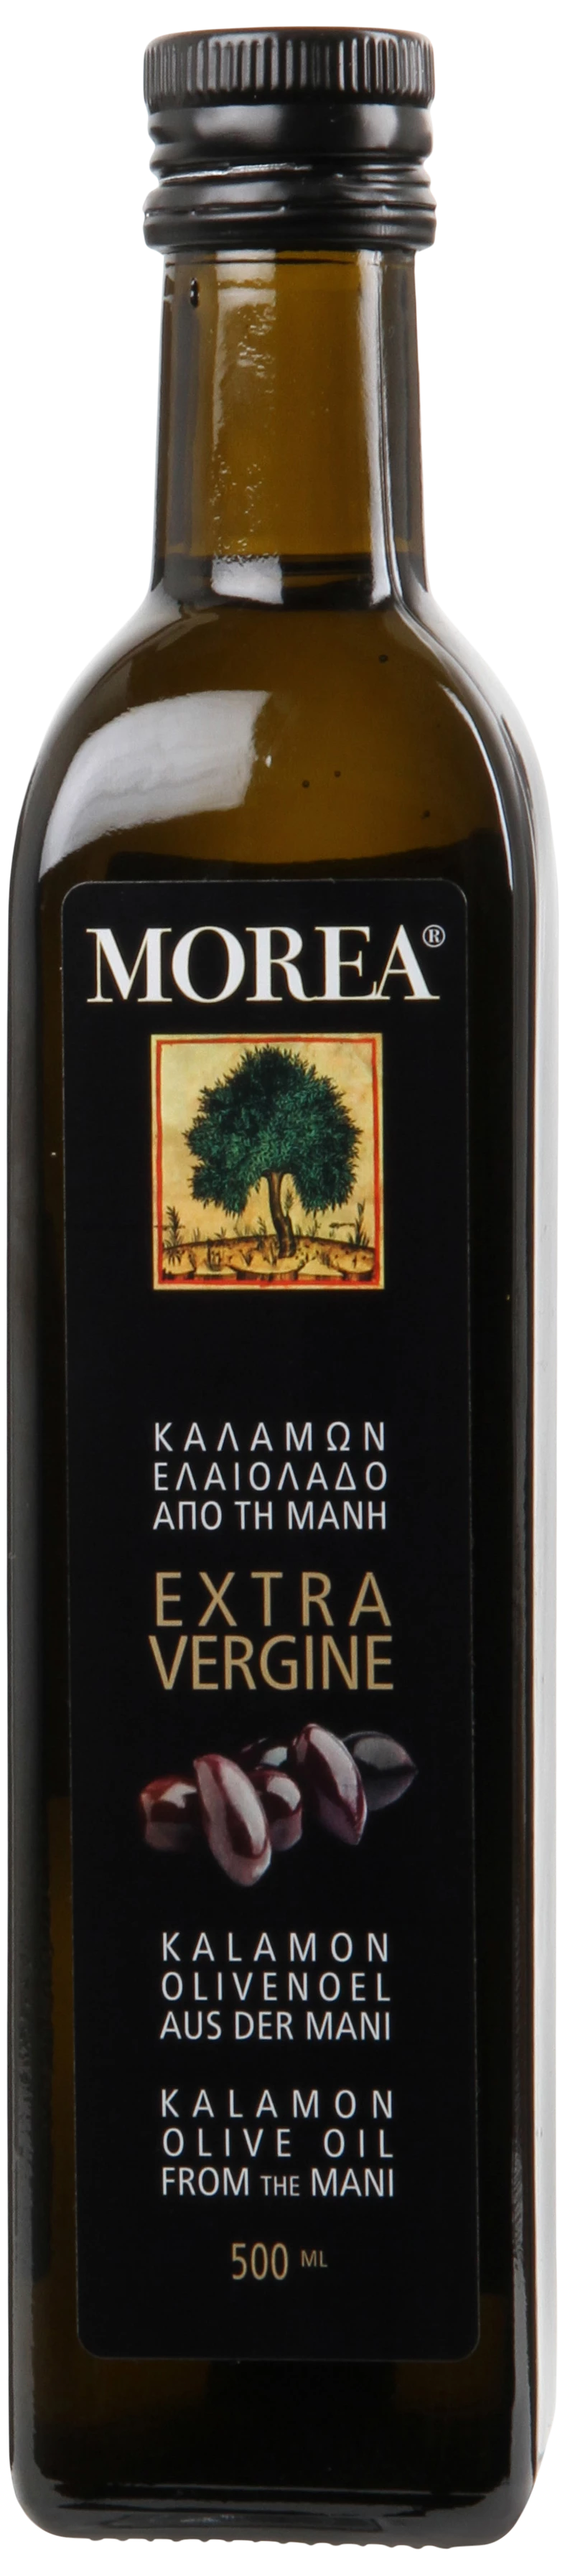 Løgismose Delikatesser Morea Kalamon olivenolie 500ml - 219950